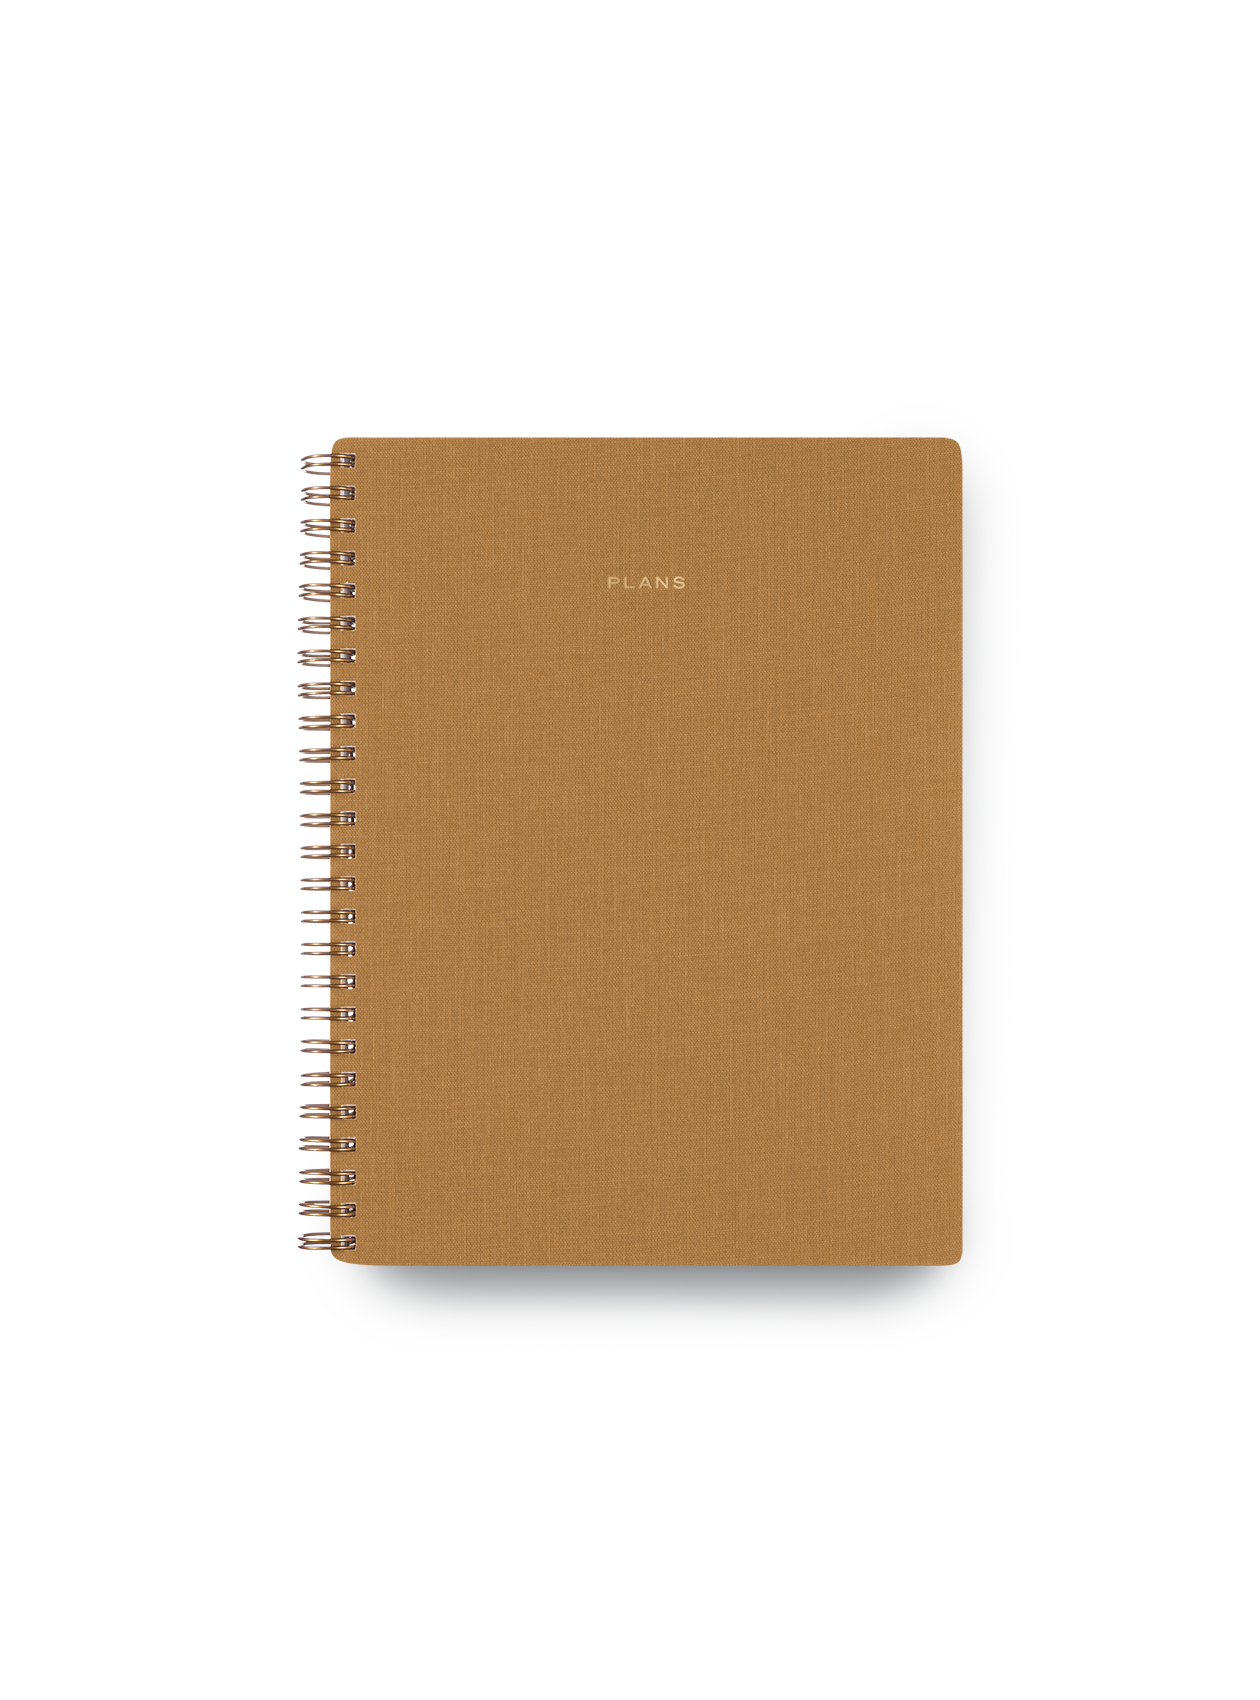 "Plans" Journal - Grid/Blank Paper